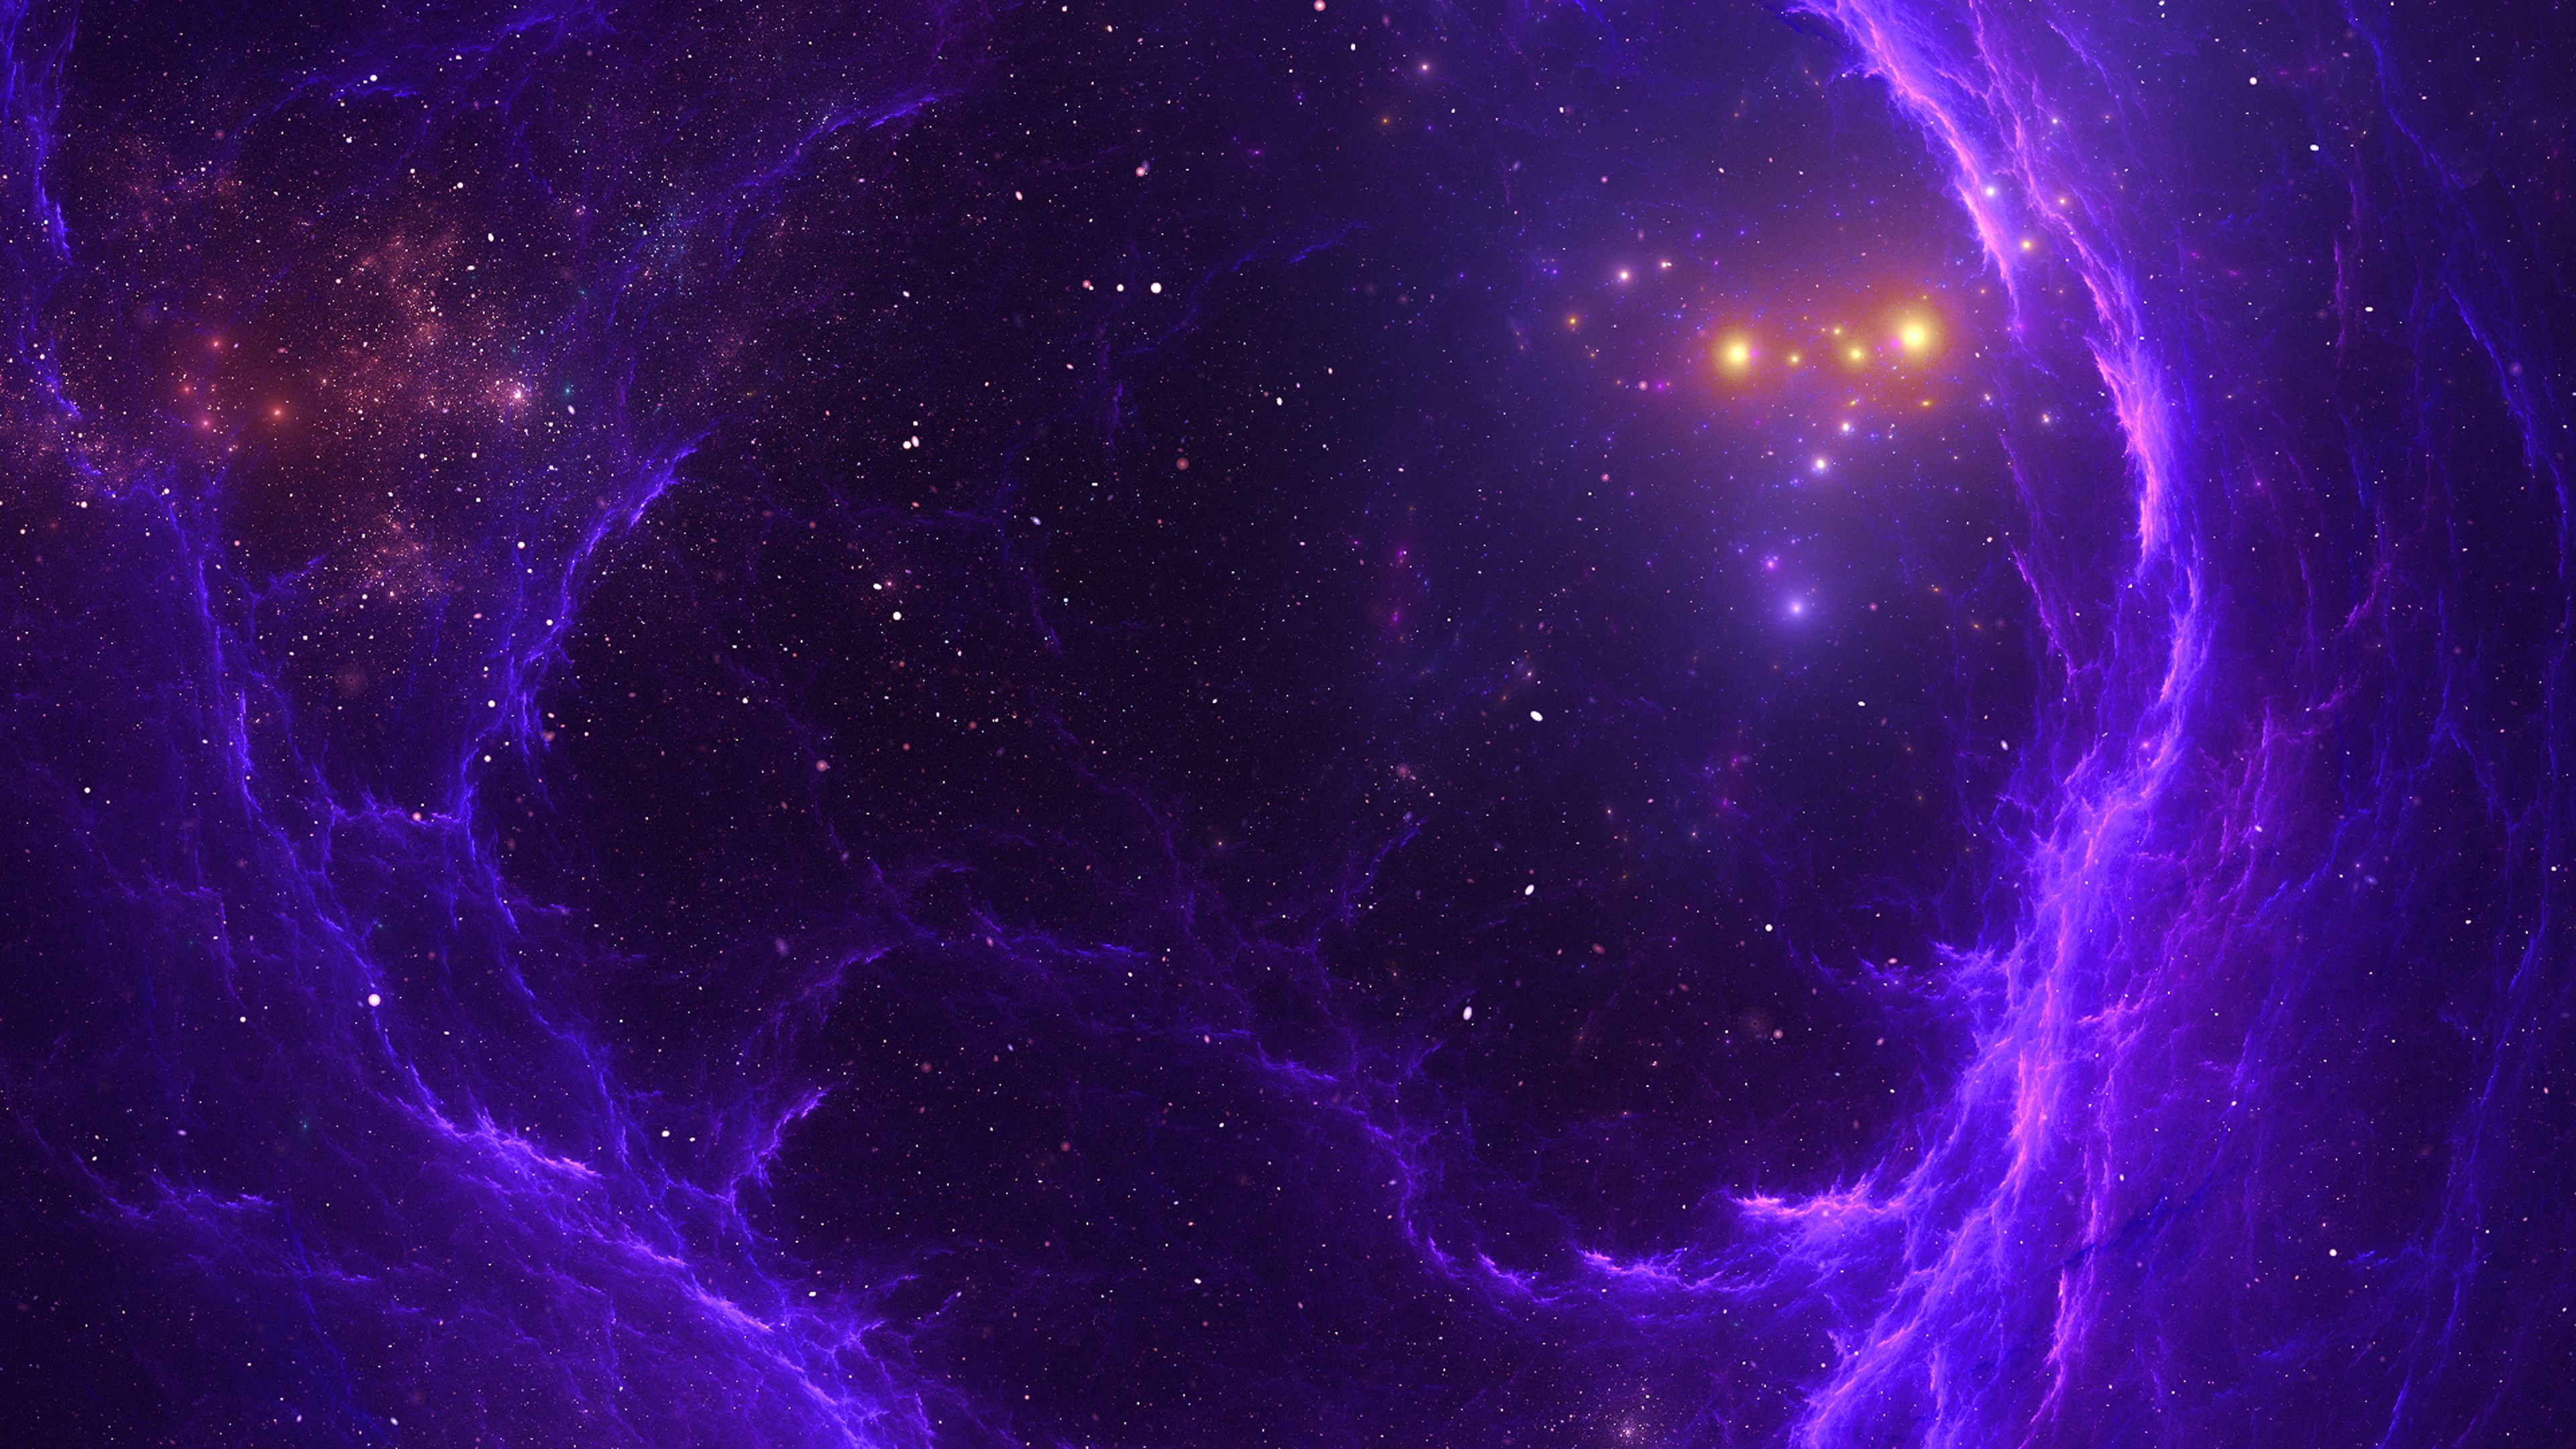 Purple Nebula Haze Stars 4k, HD Digital Universe, 4k Wallpaper, Image, Background, Photo and Picture